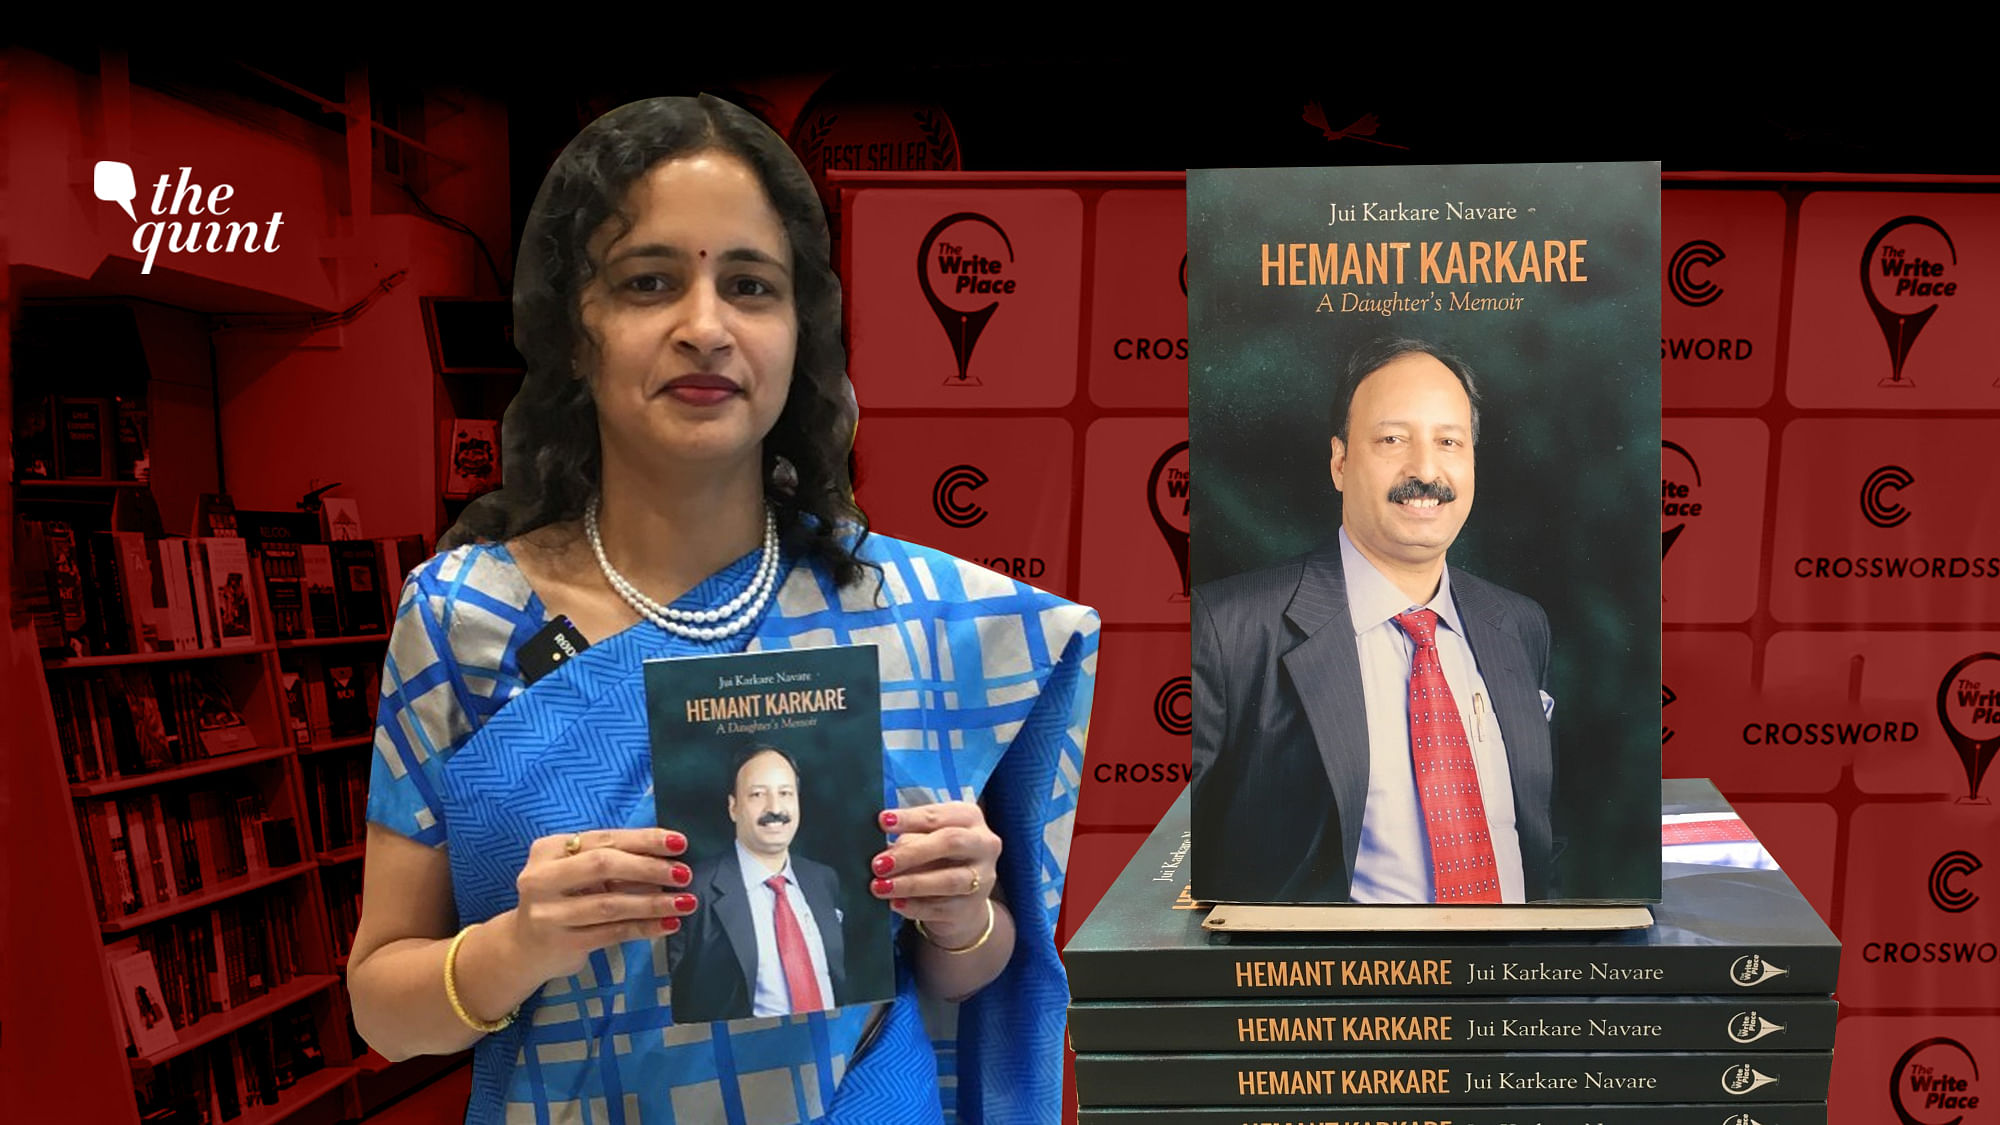 who killed hemant kar kare ebook